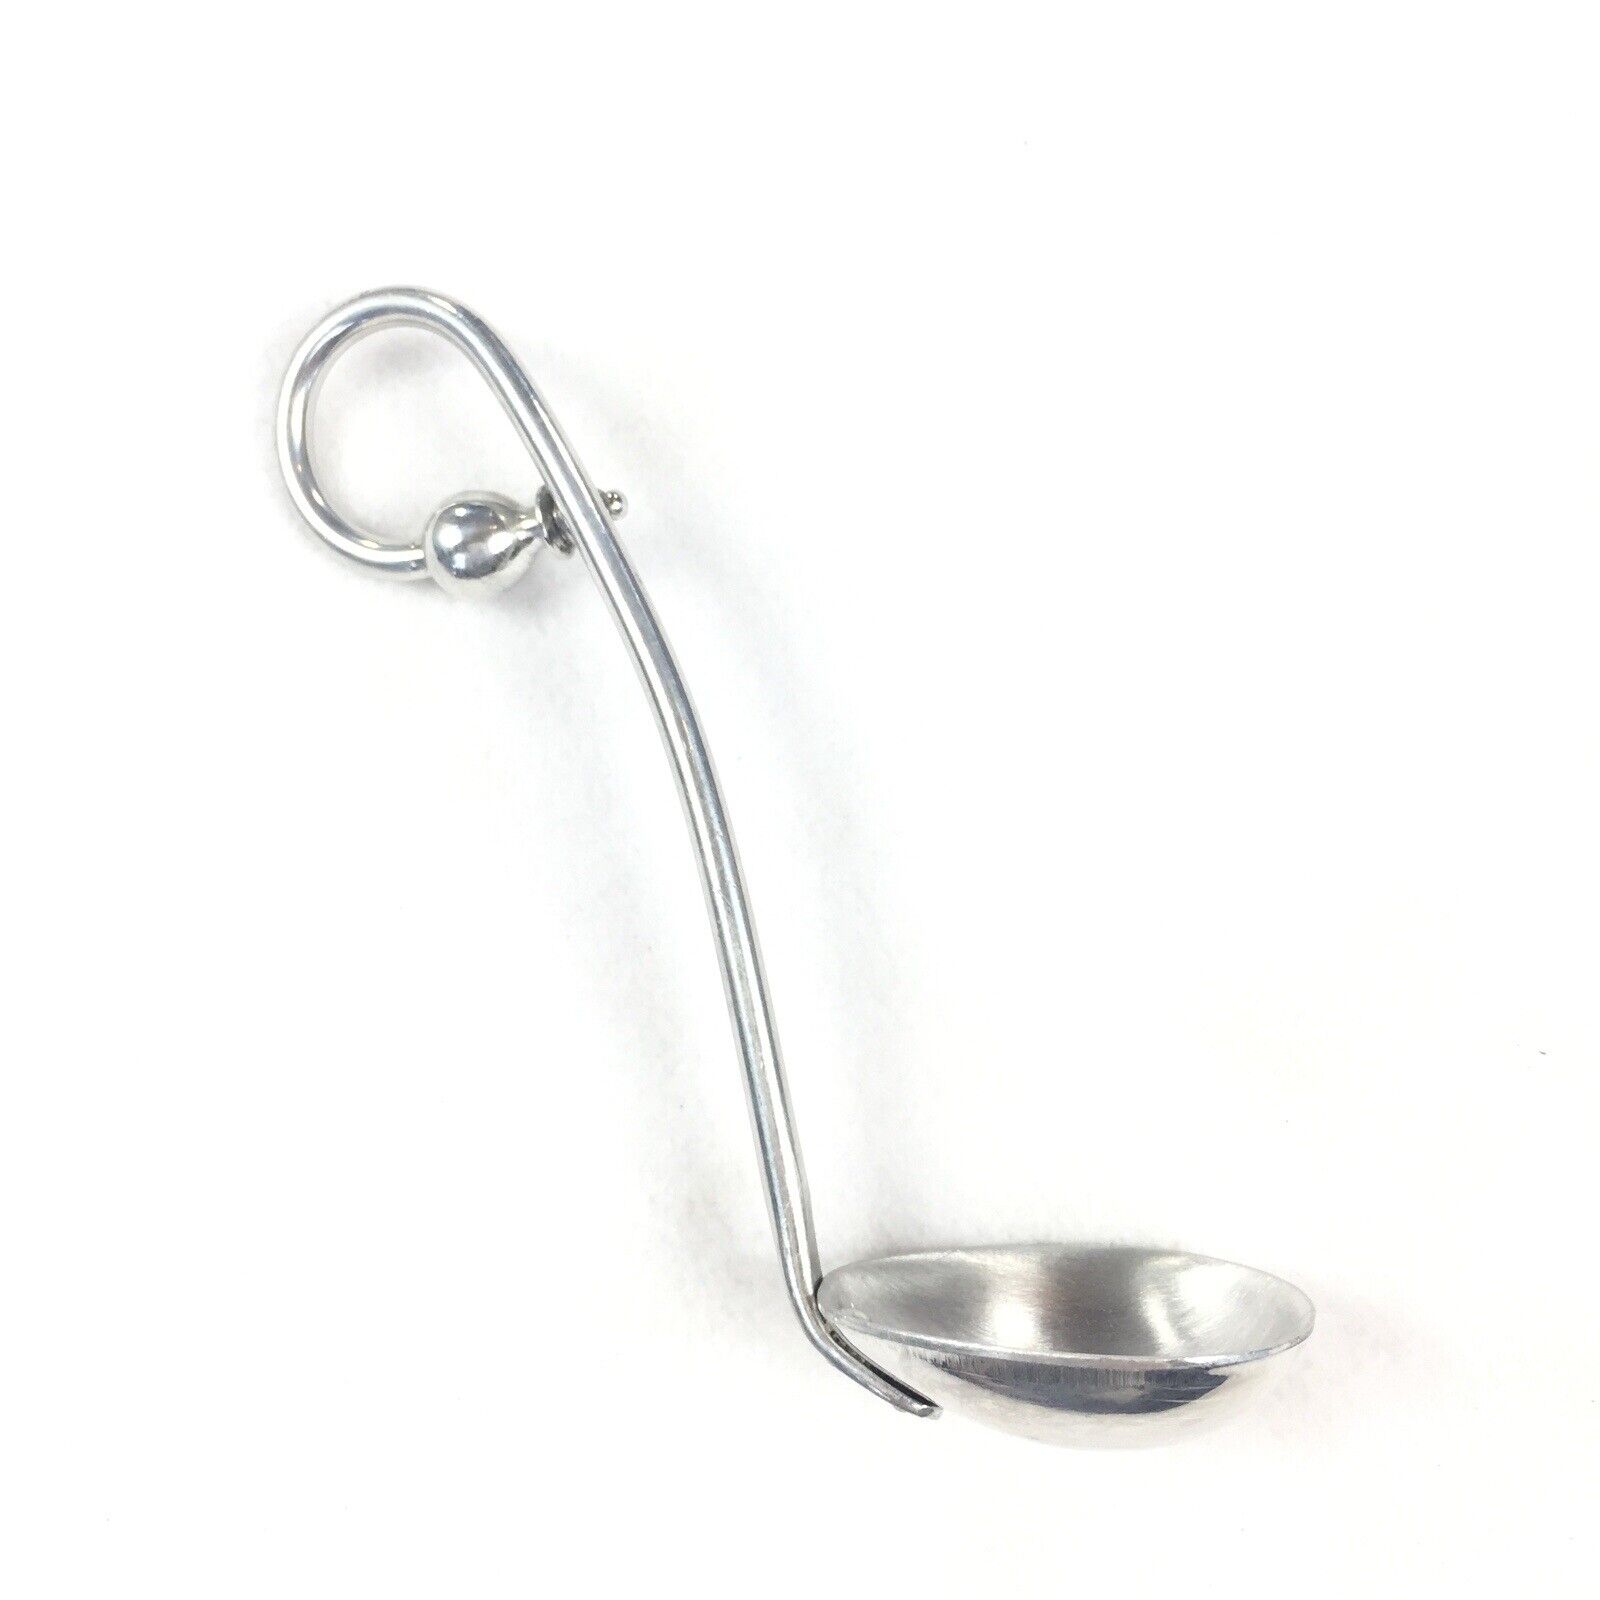 Vintage Handcrafted Sugar Spoon with Twisted Loop Handle Silver Tone Metal